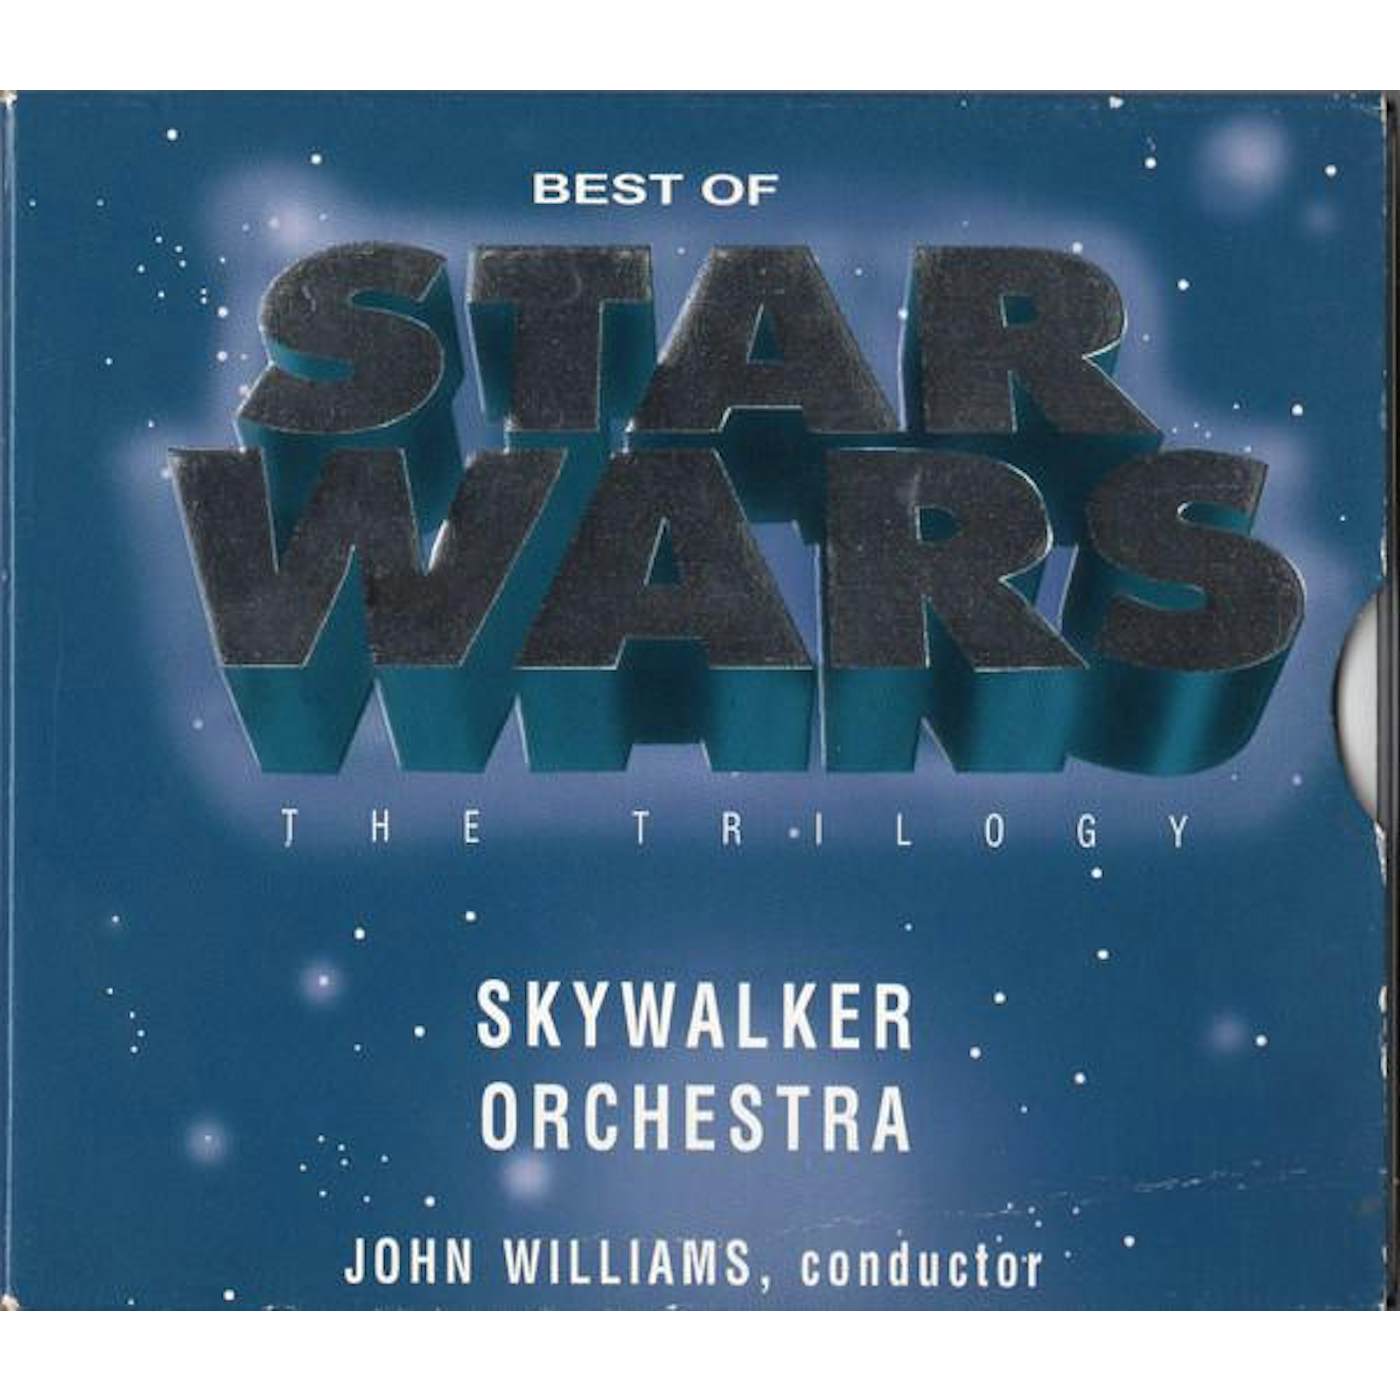 JOHN WILLIAMS CONDUCTS JOHN WILLIAMS CD